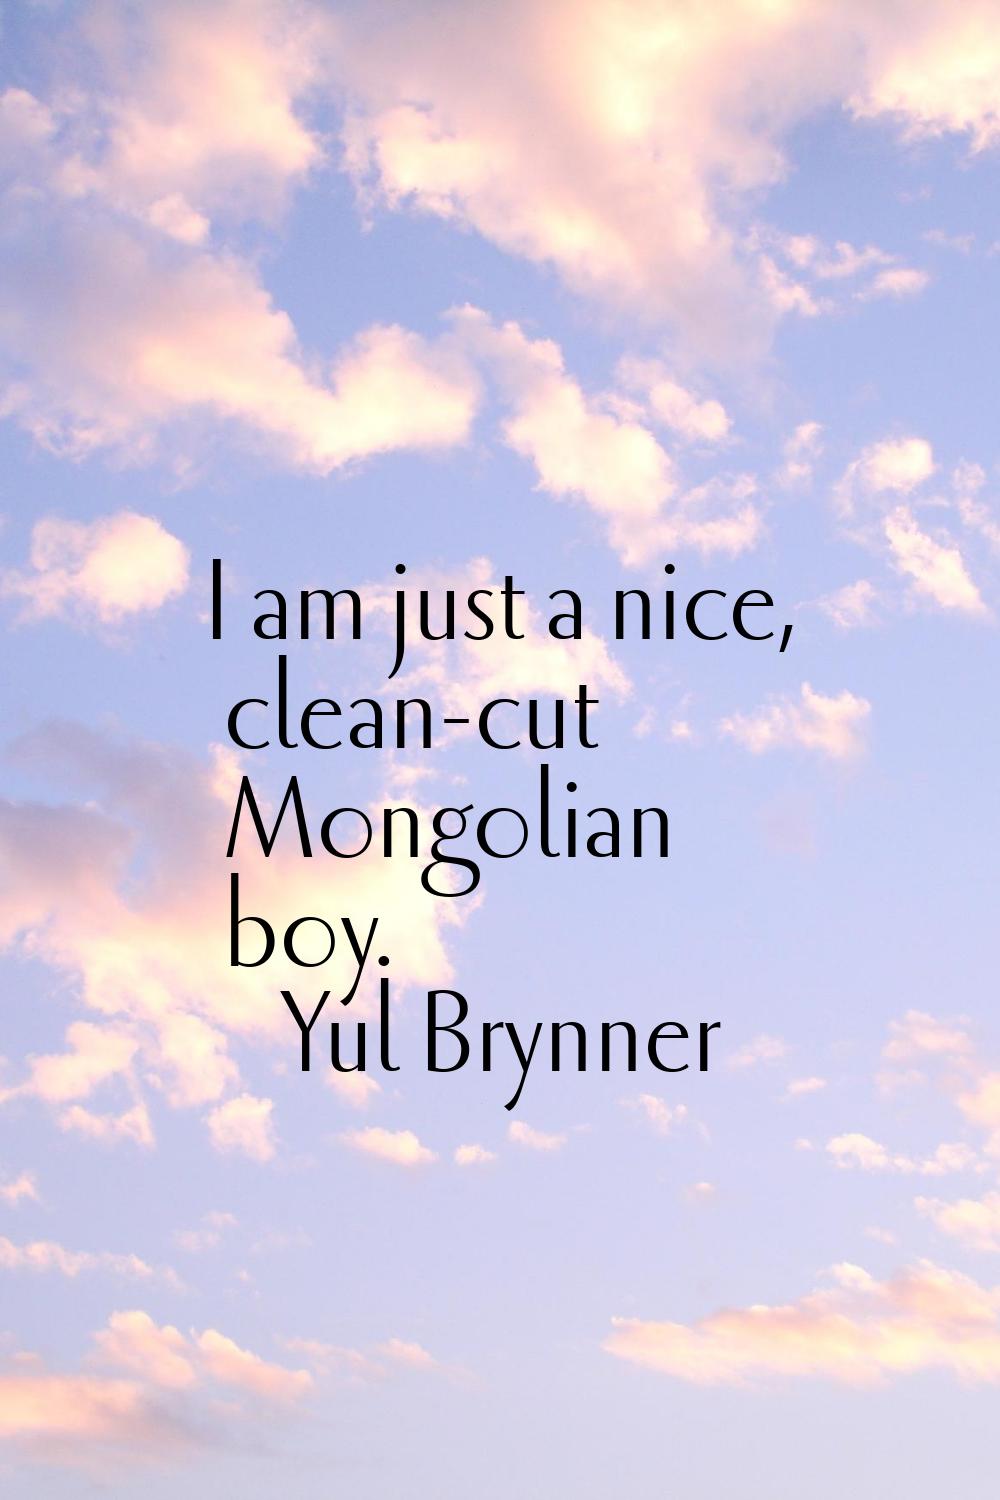 I am just a nice, clean-cut Mongolian boy.